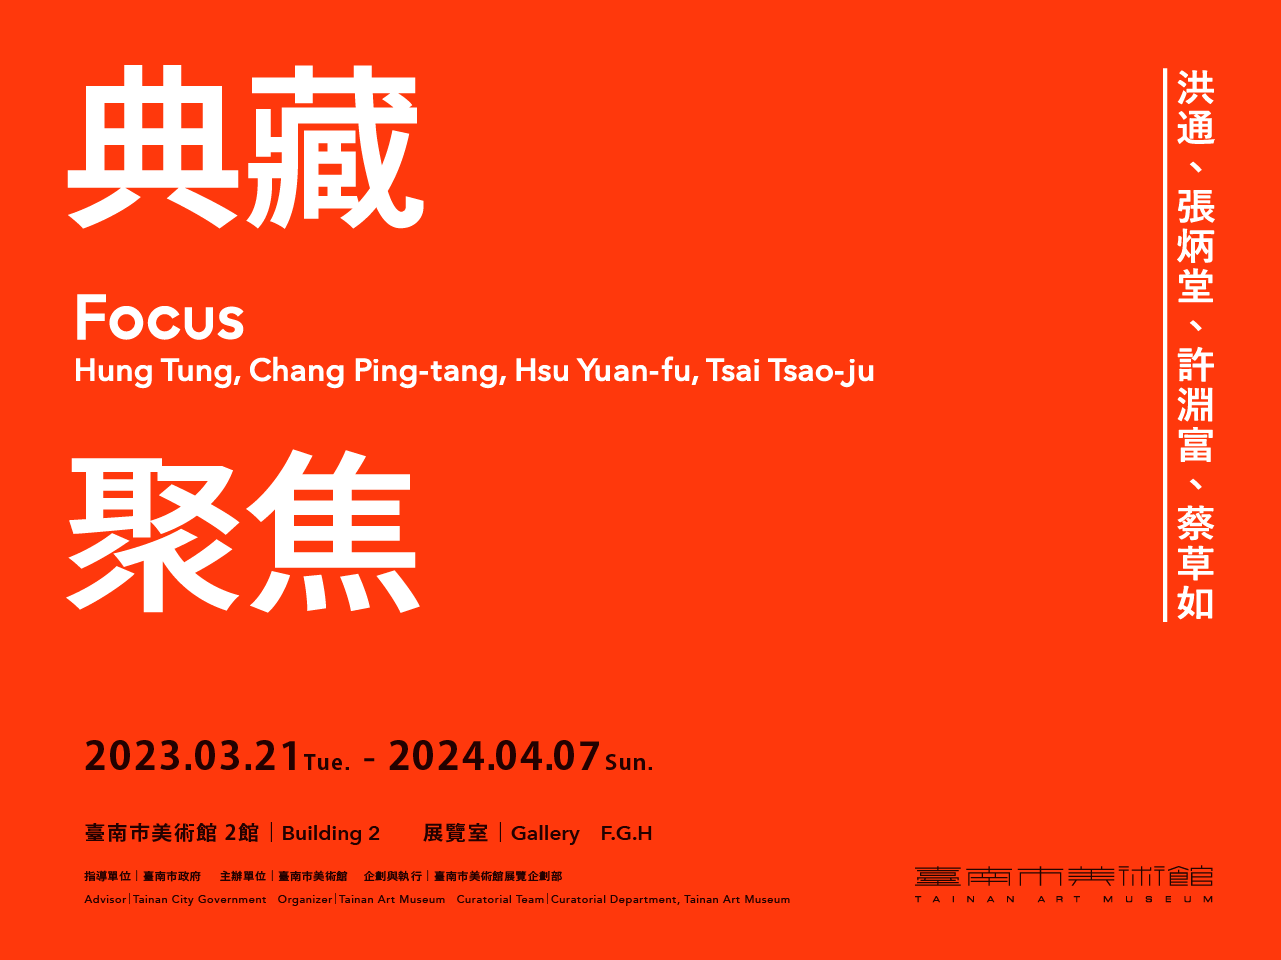 「典藏聚焦：洪通、張炳堂、許淵富、蔡草如」 Focus: Hung Tung, Jang Bing-tang, Hsu Yuan-fu, Tsai Tsao-Ju